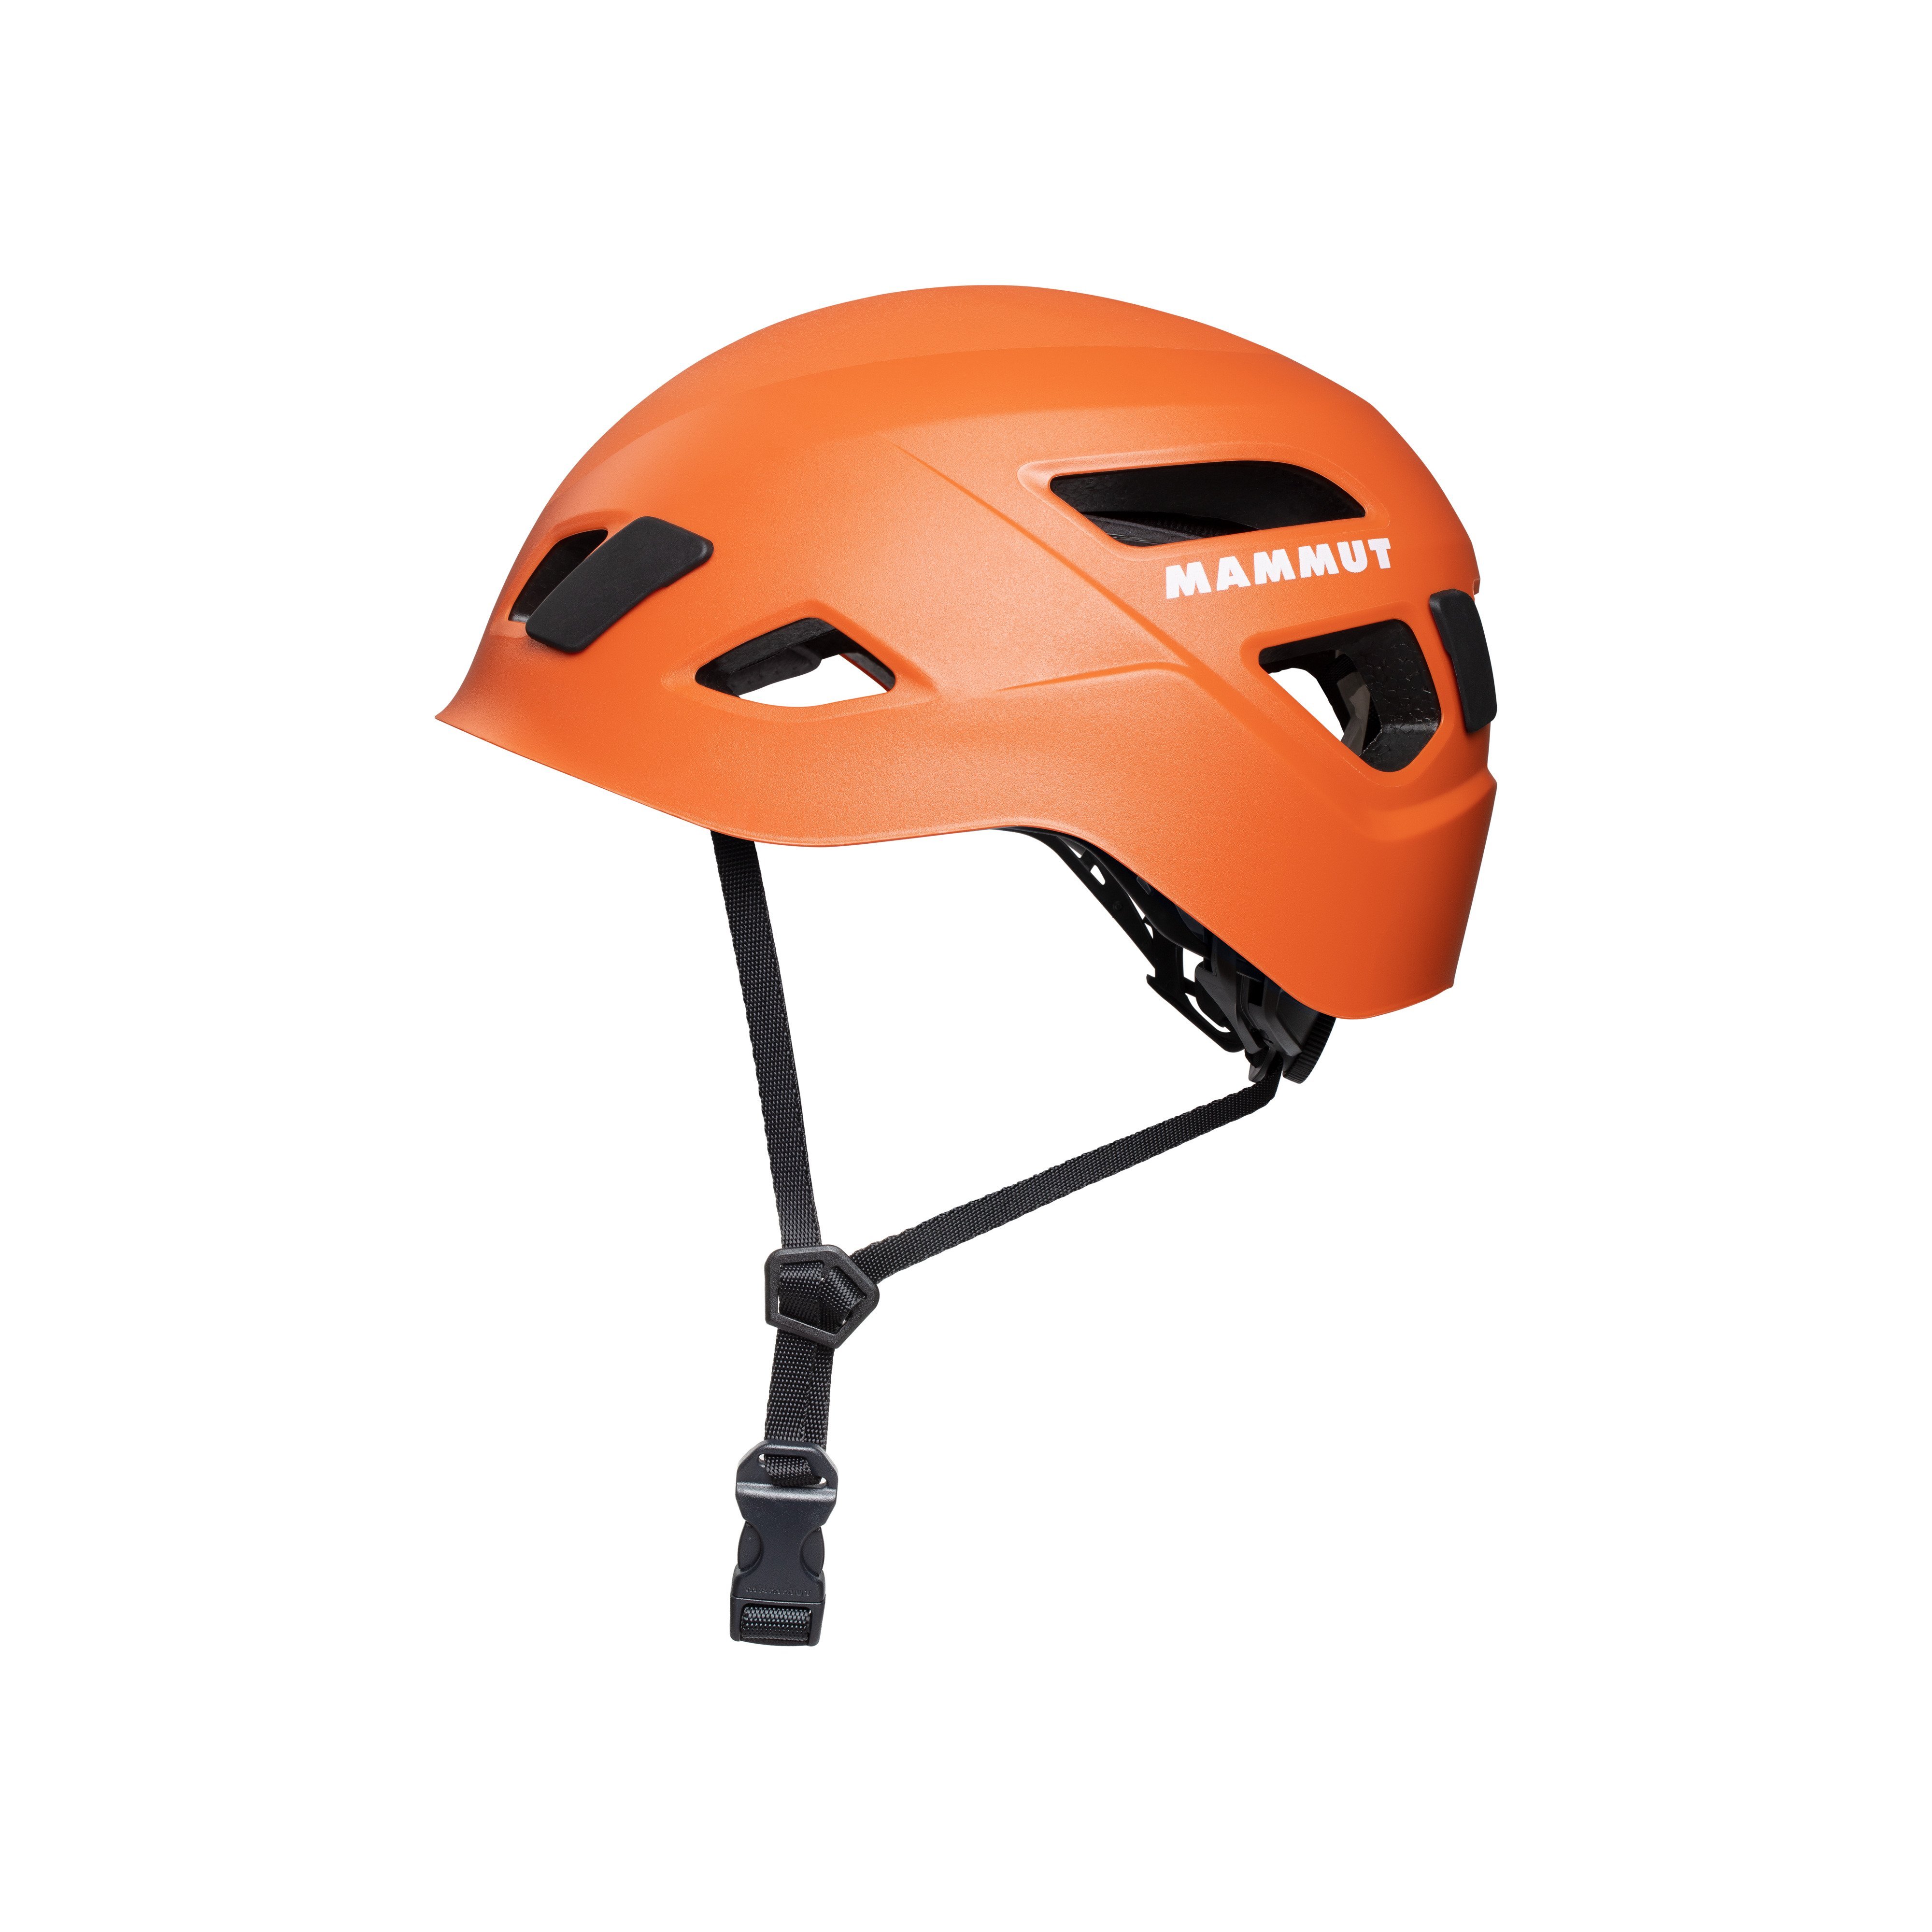 Skywalker 3.0 Helmet - orange, one size product image